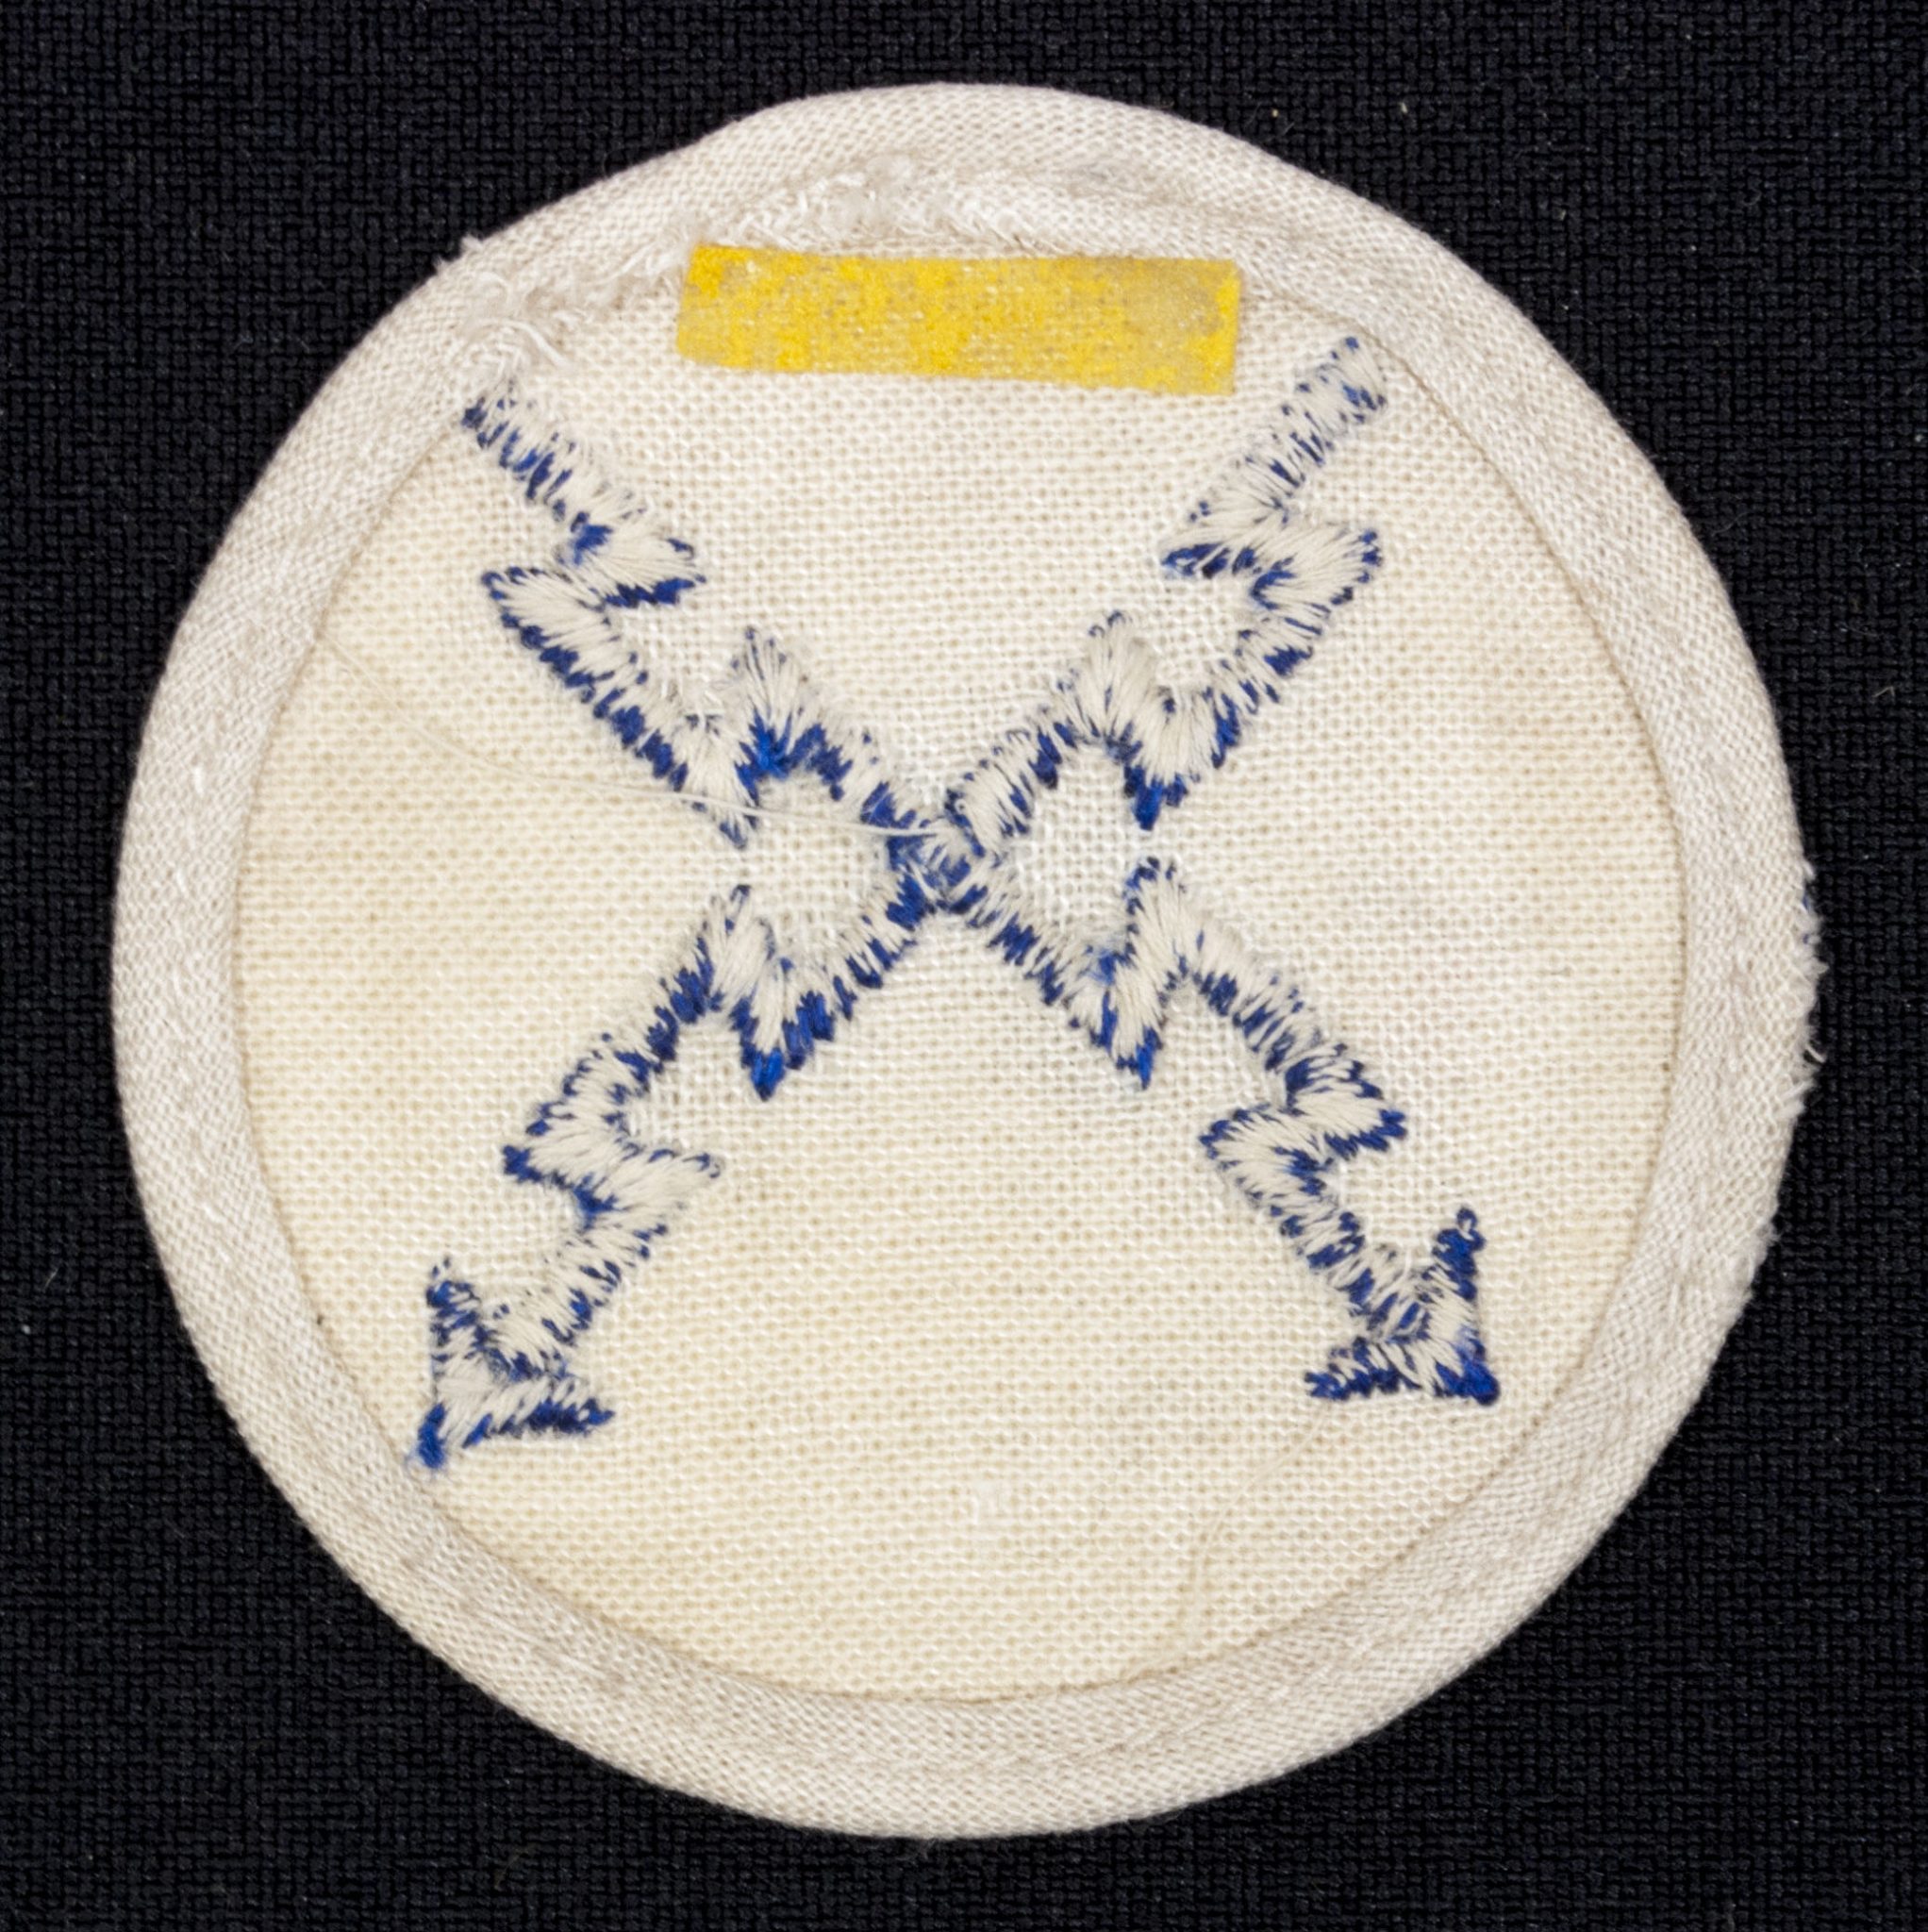 Kriegsmarine (KM) Teletypist EM's career sleeve insignia